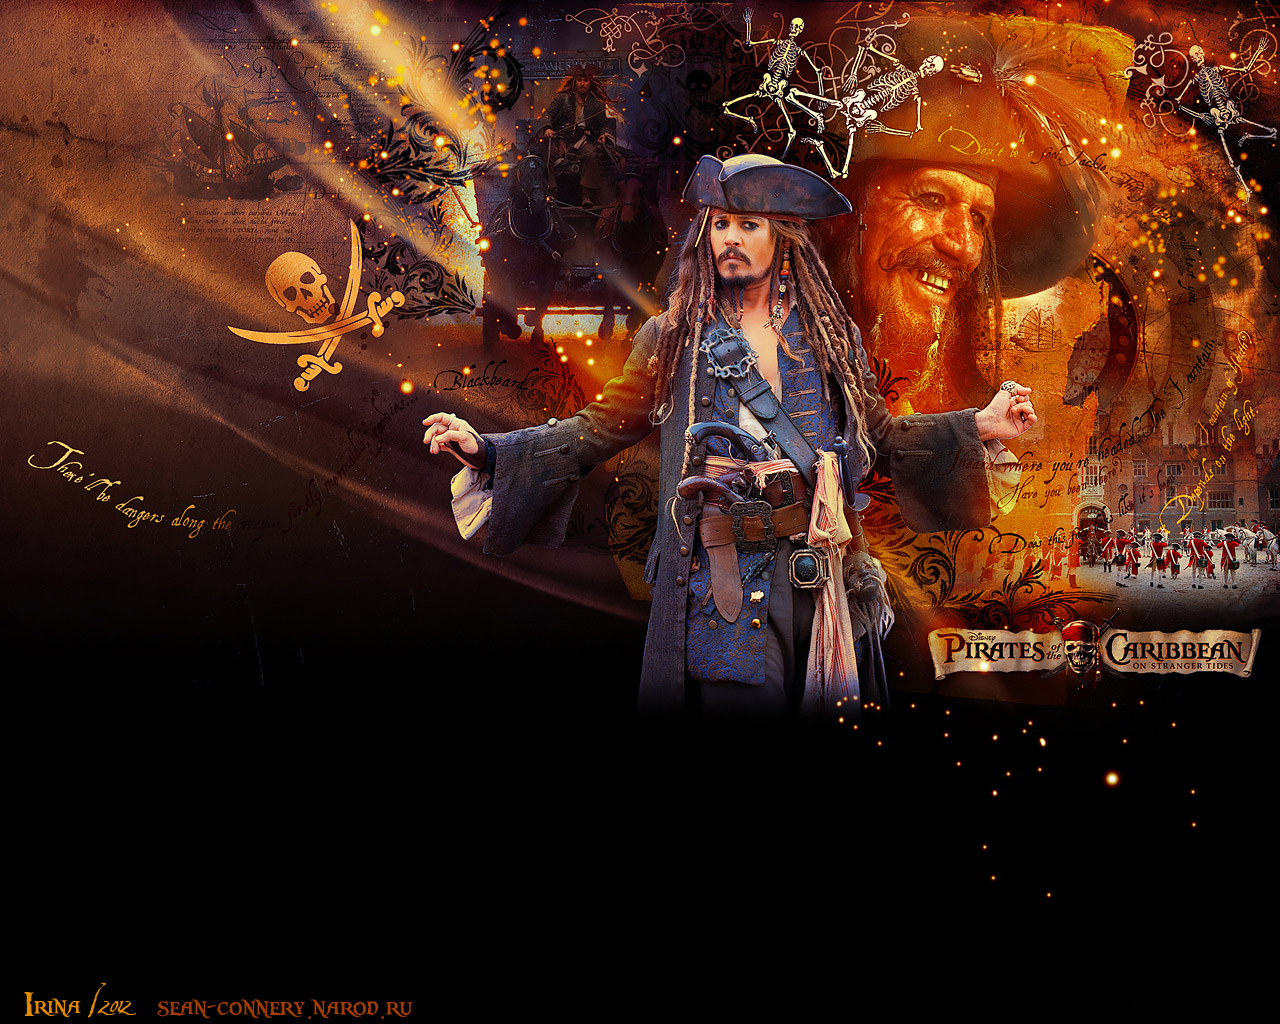   .    (Pirates of the Caribbean. On Stranger Tides).   (Johnny Depp)  Wallpaper